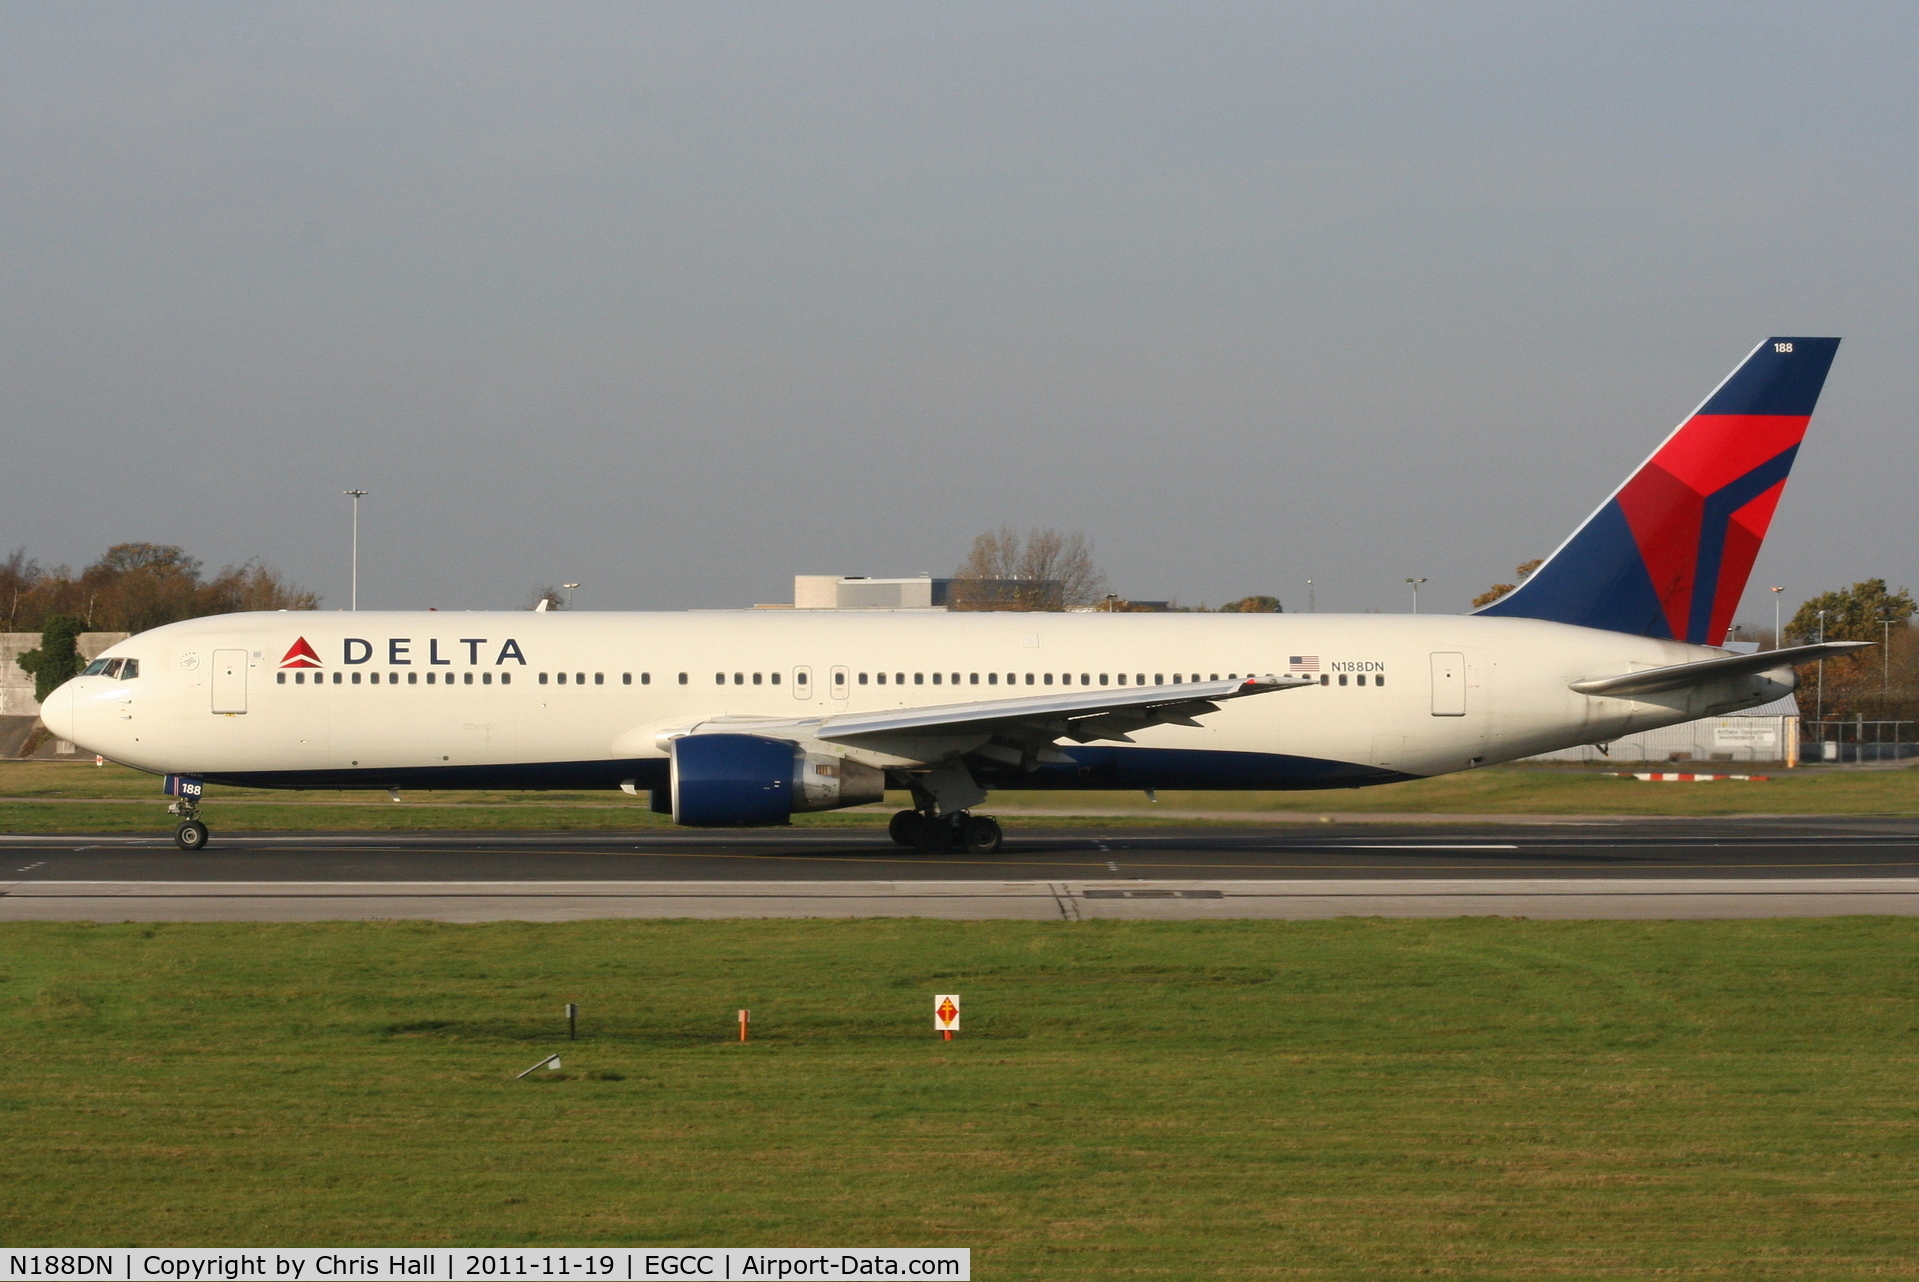 N188DN, 1996 Boeing 767-332 C/N 27583, Delta